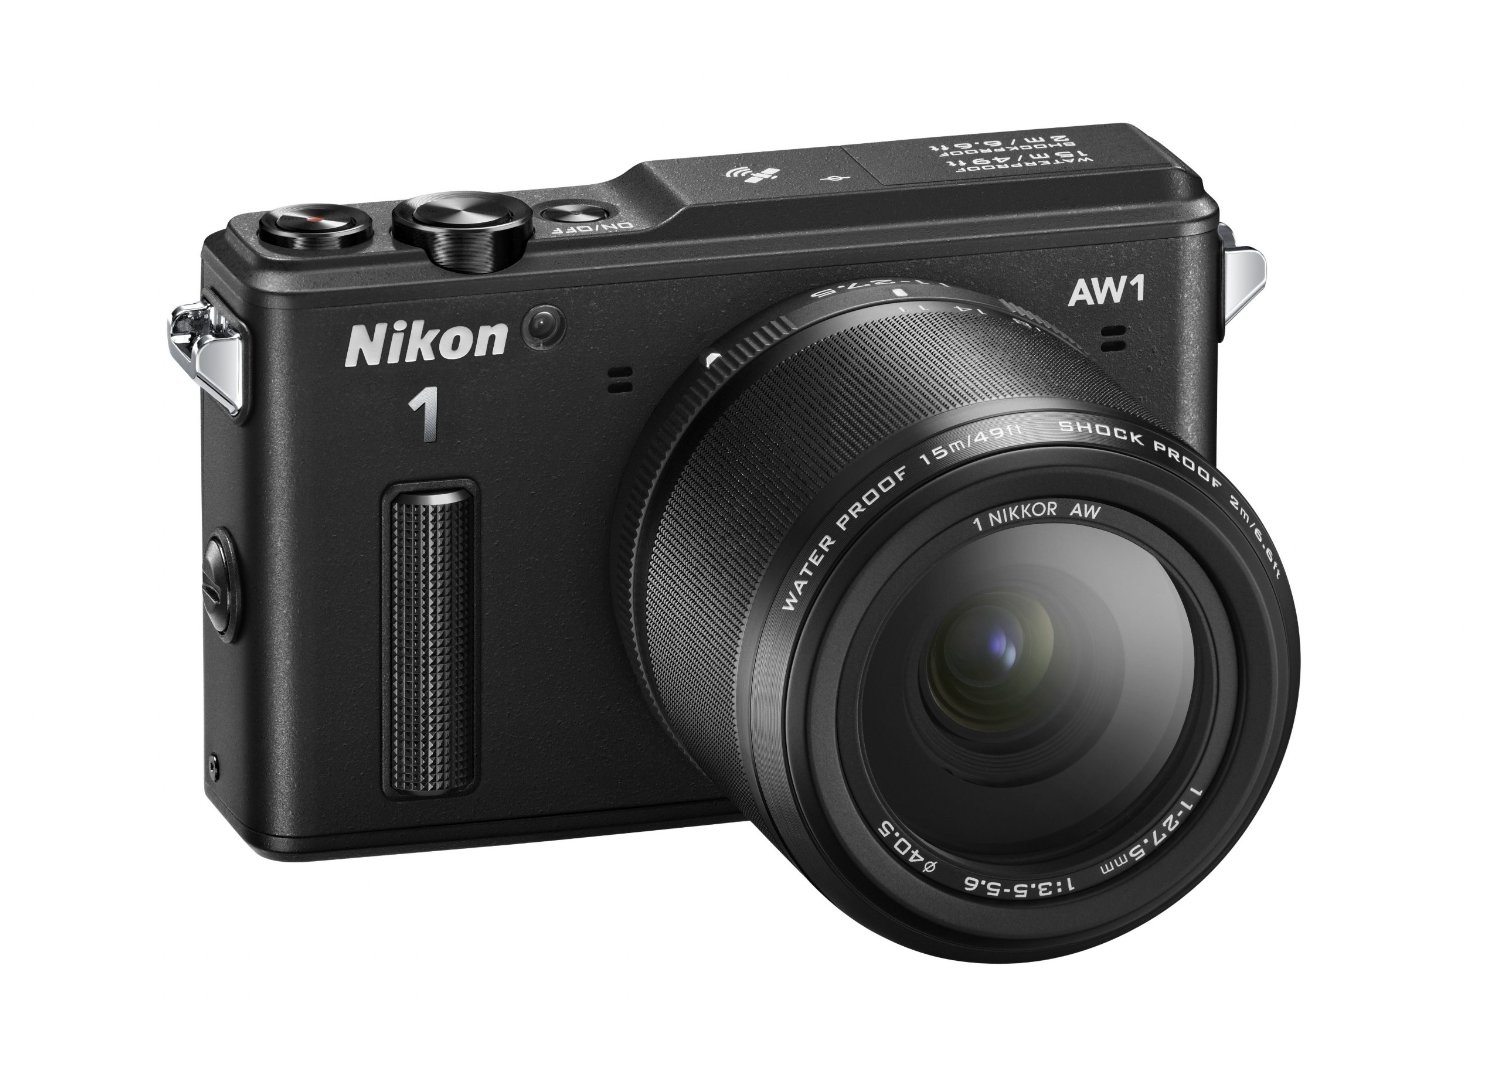 Nikon 1 AW1 HD Waterproof Digital Camera